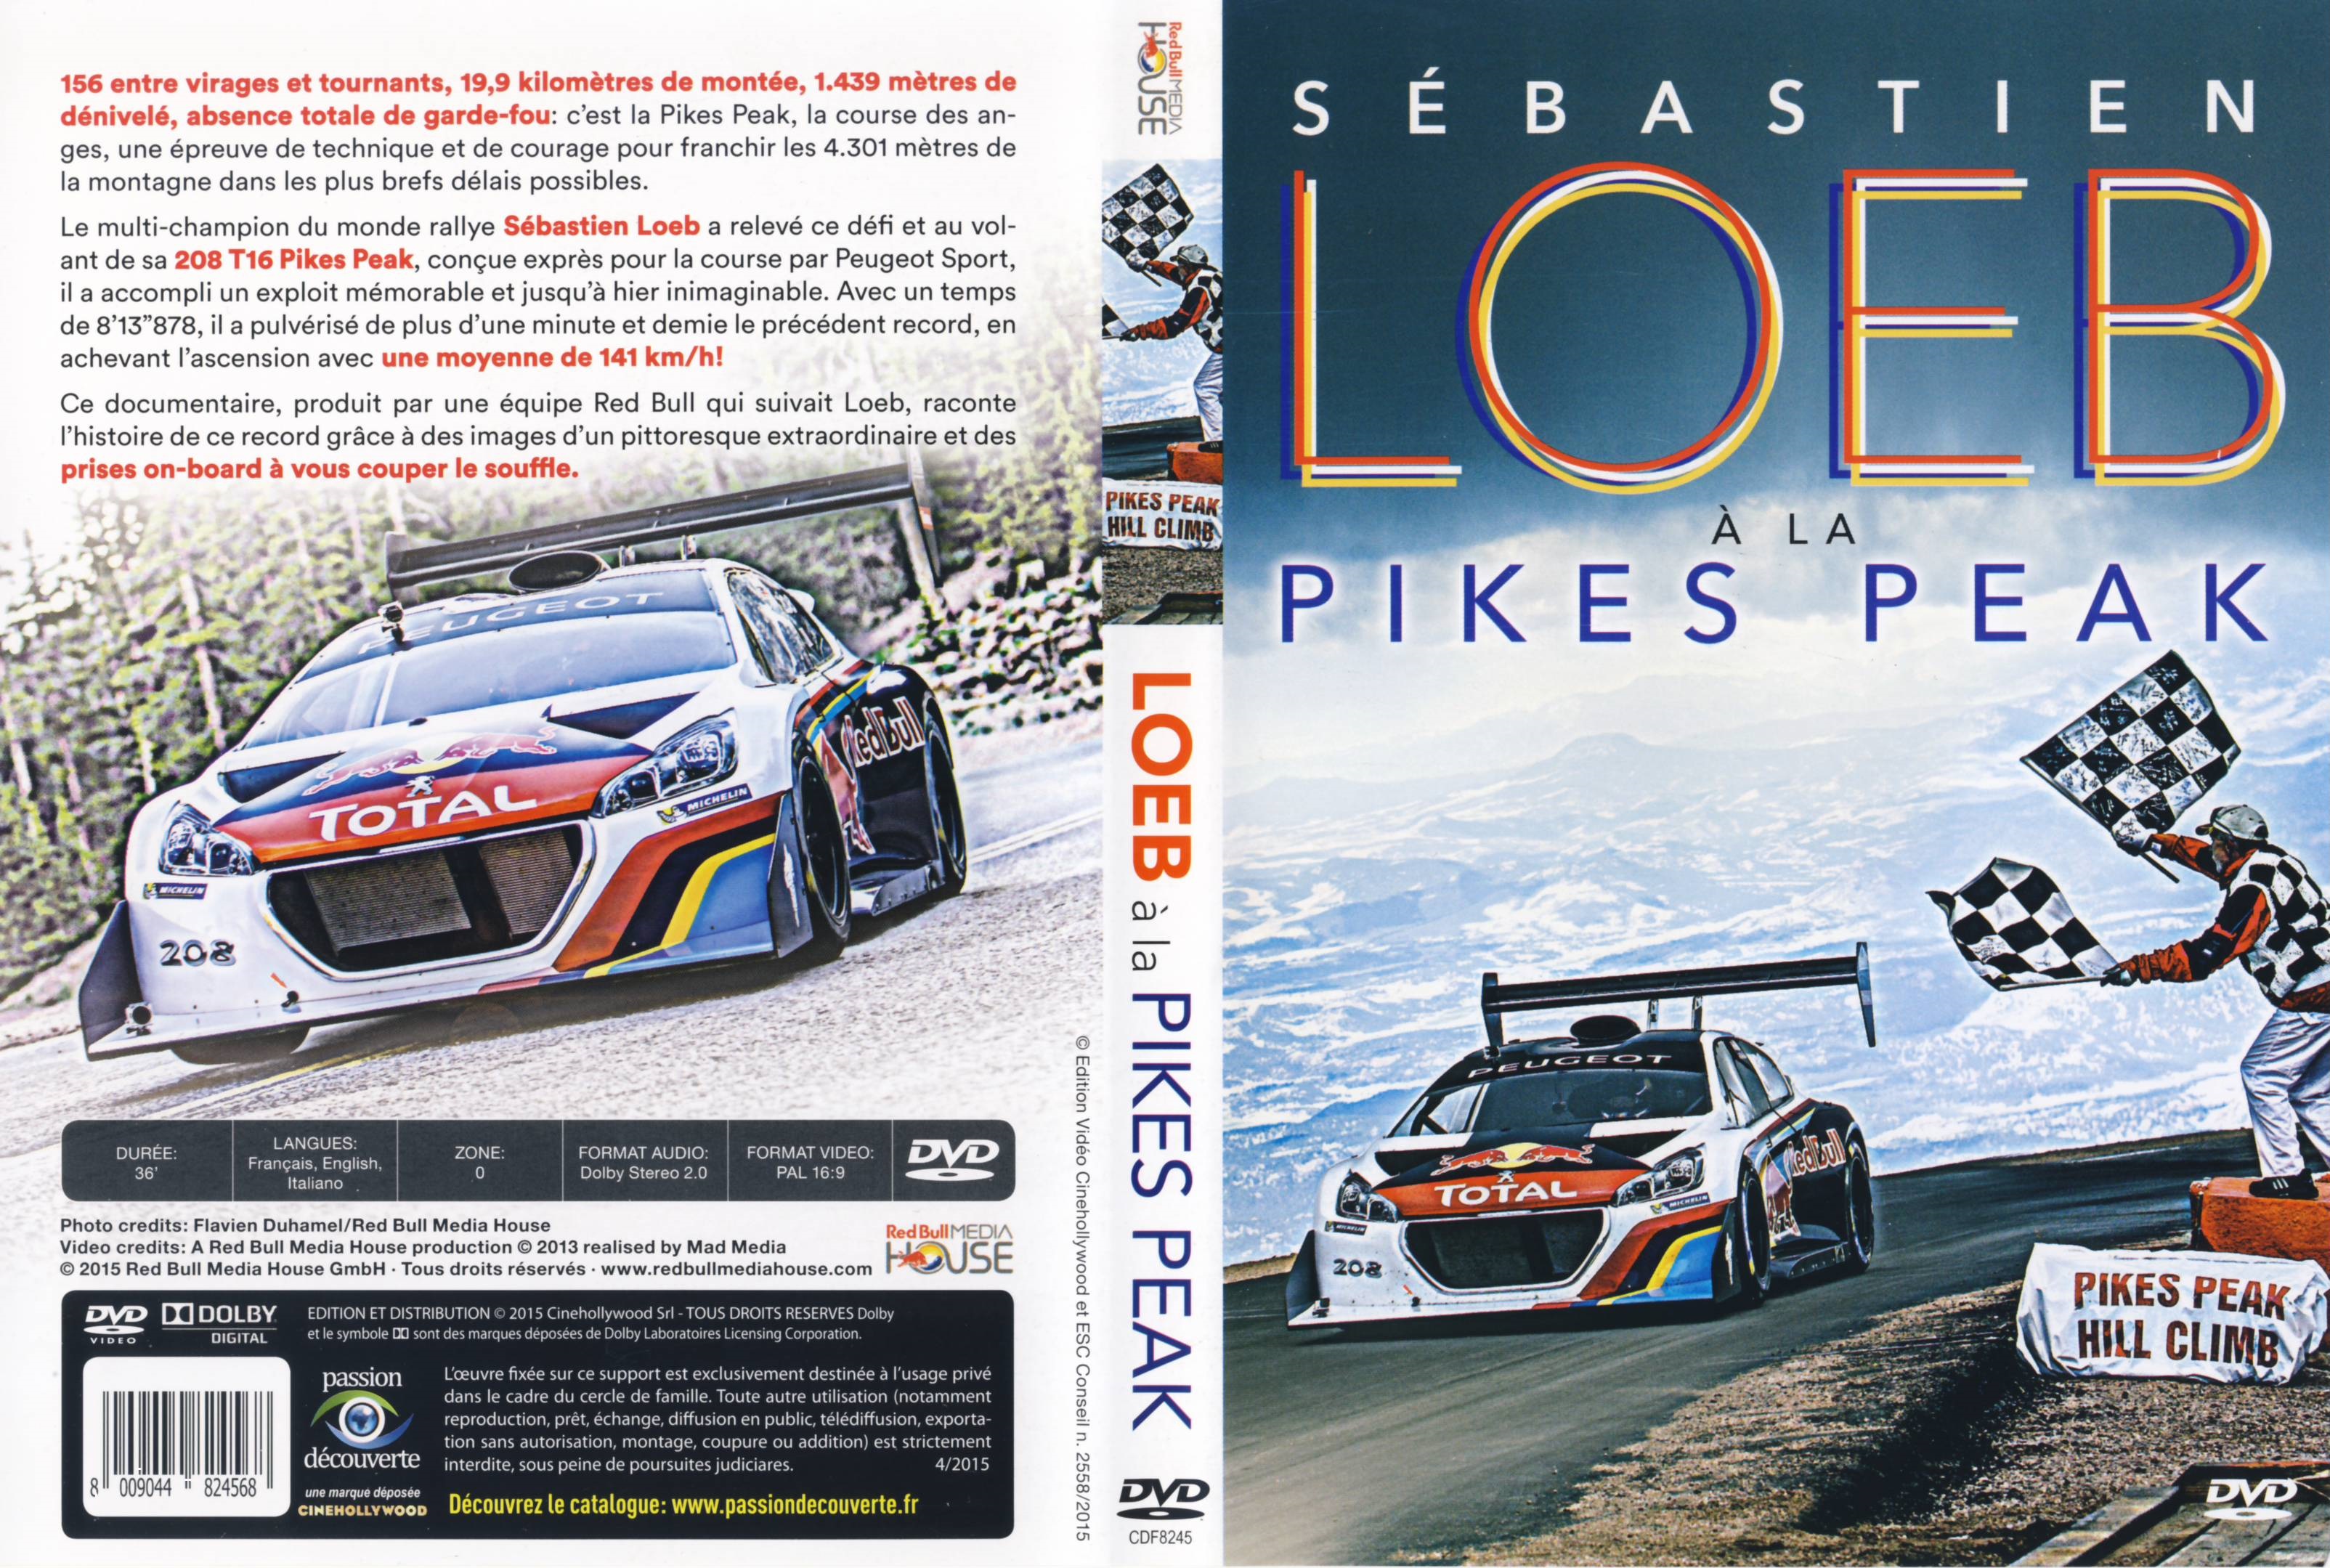 Jaquette DVD Sbastien Loeb  la pikes peak